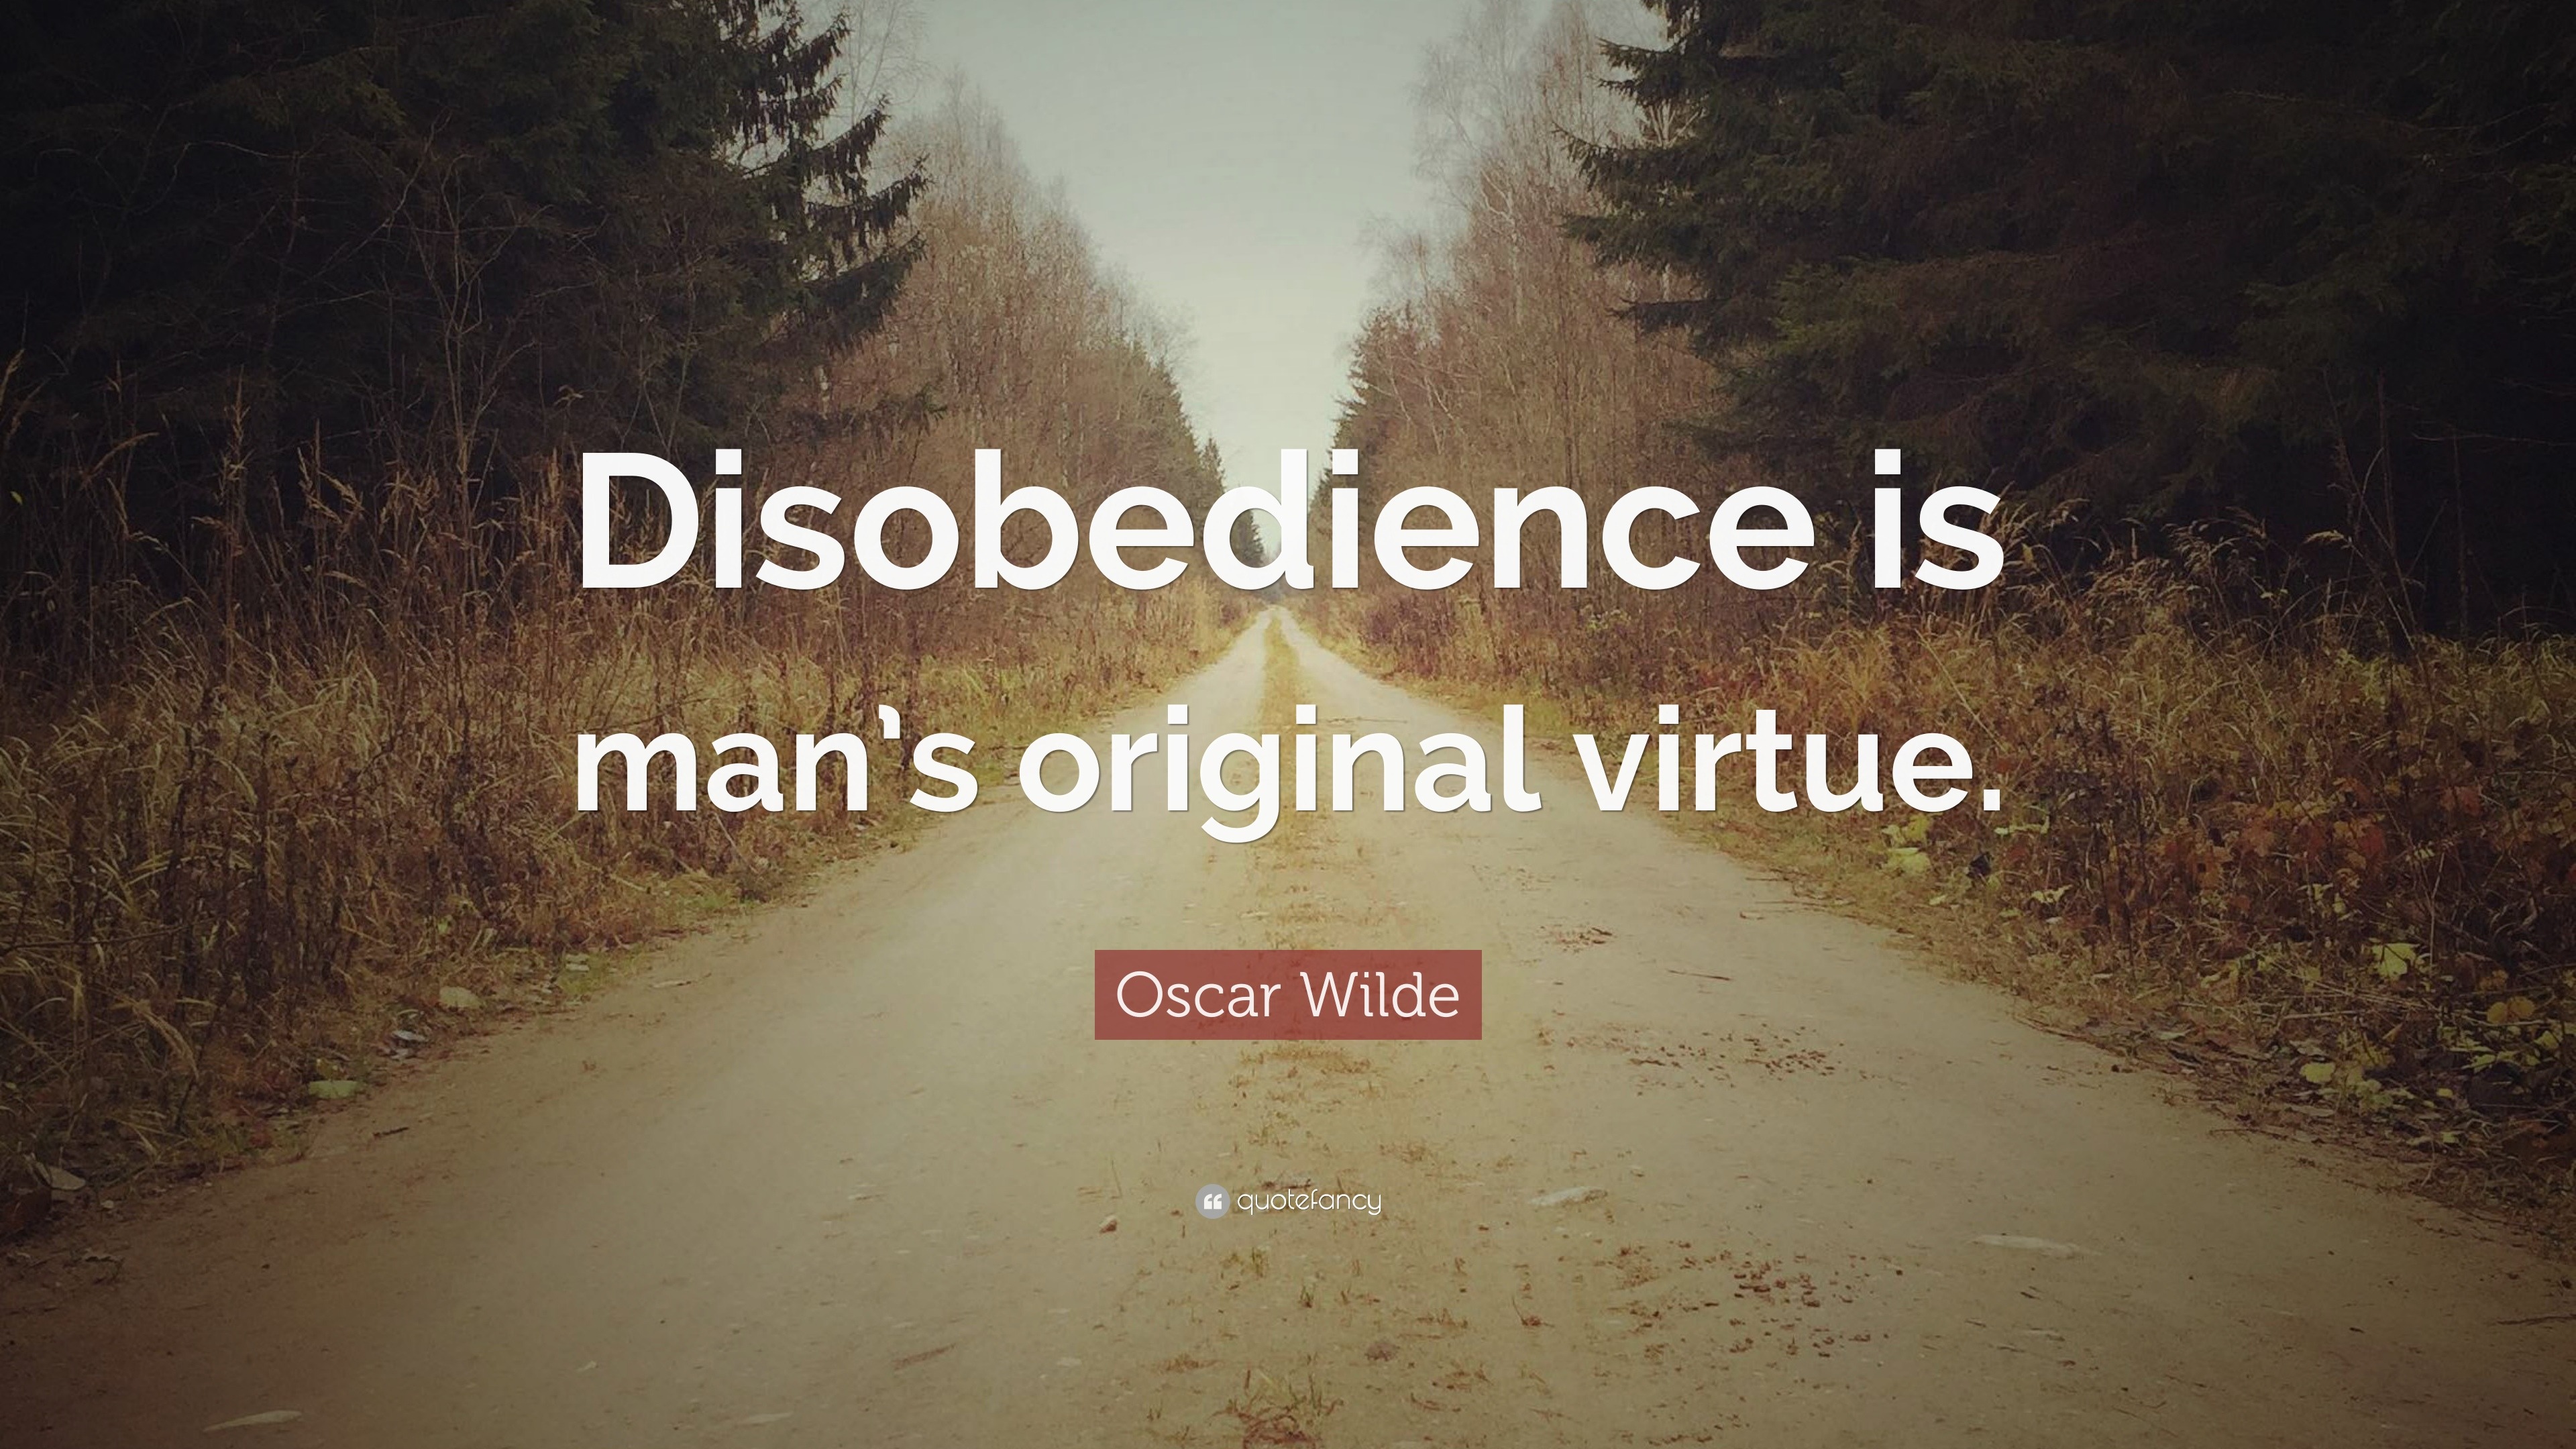 oscar wilde essay on disobedience